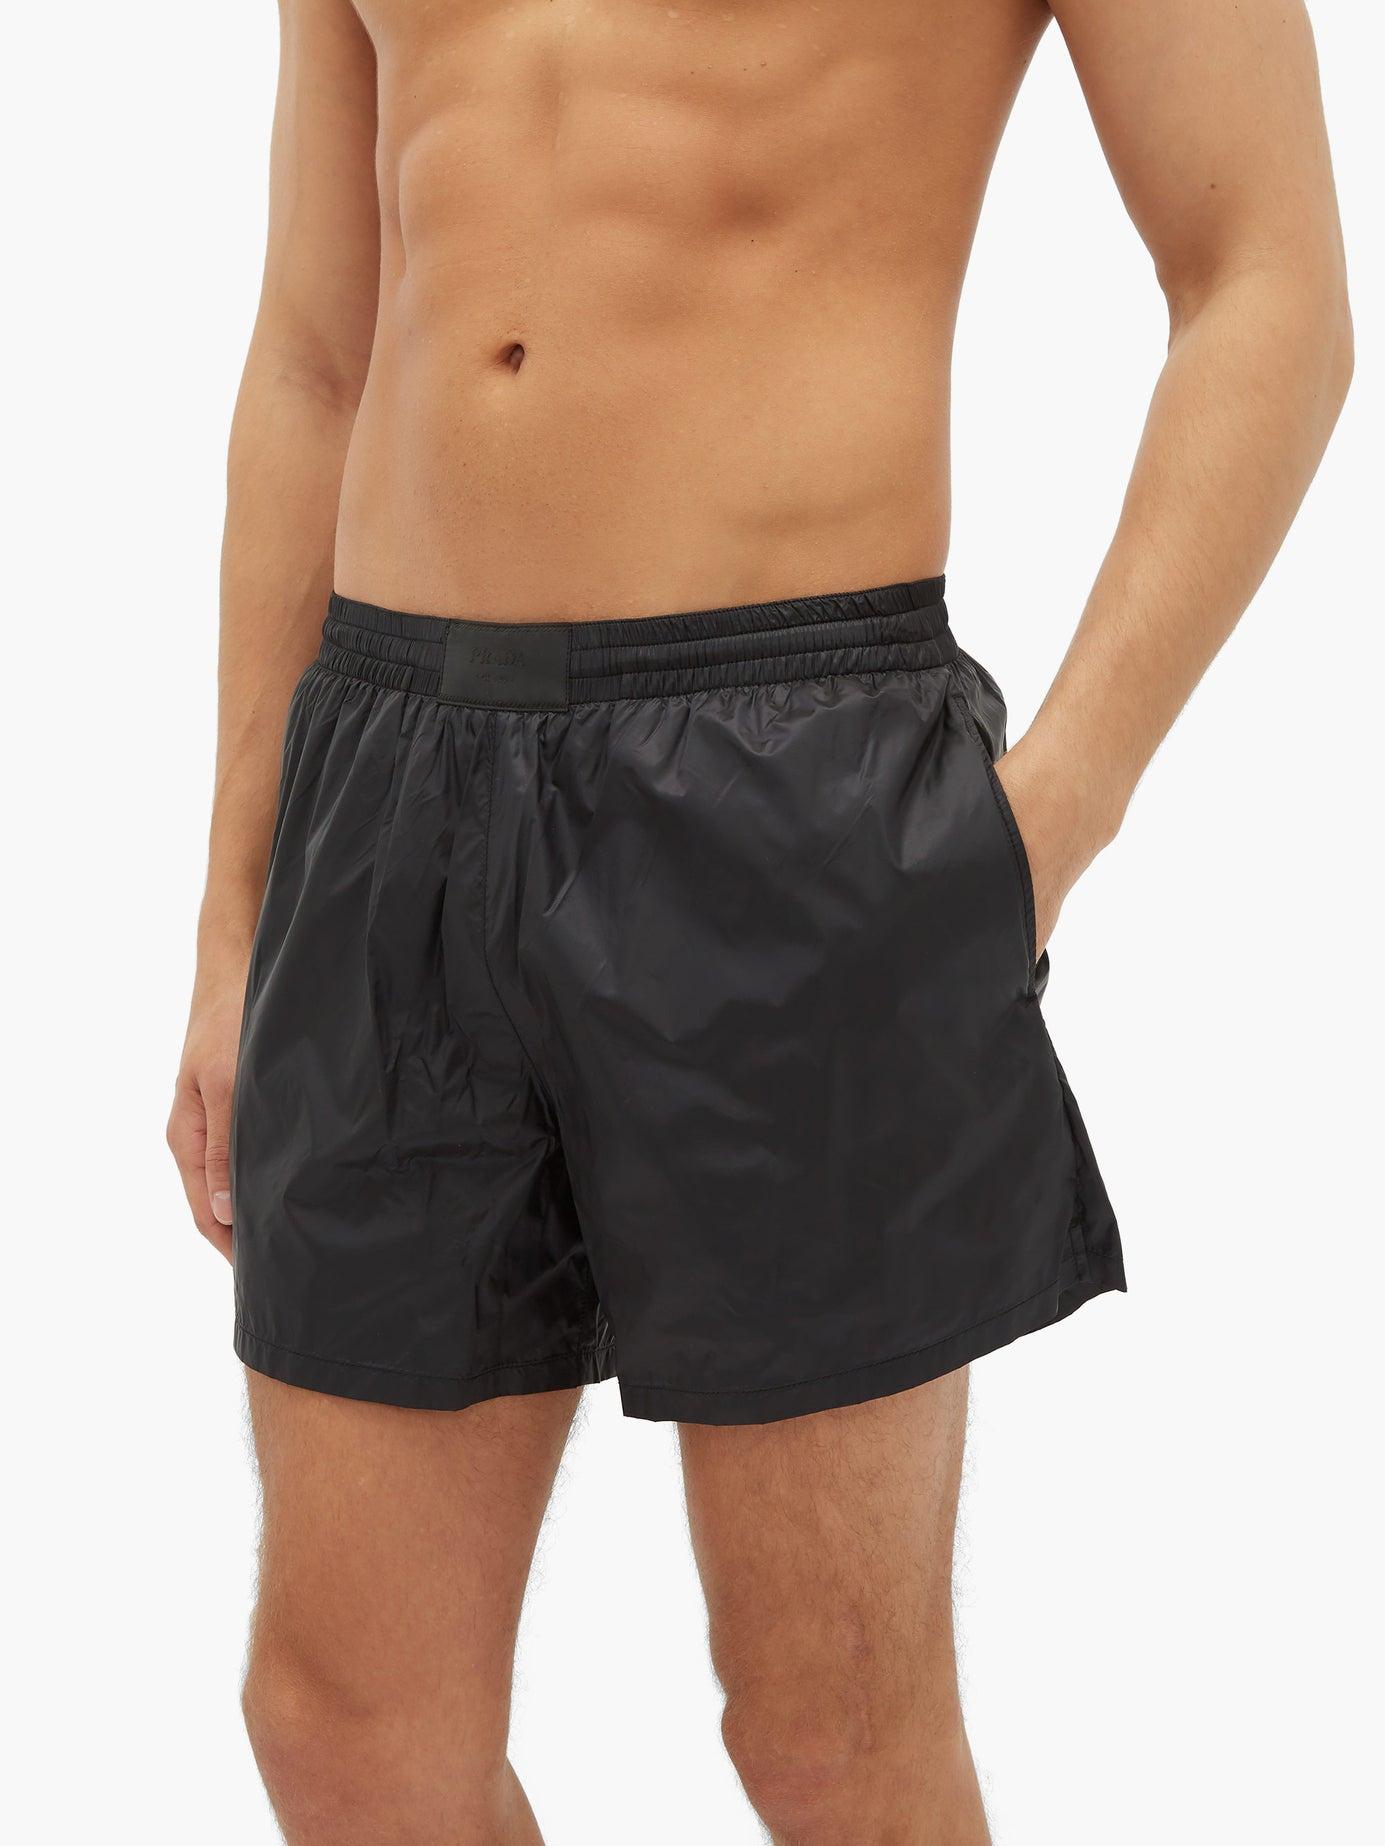 Prada Appliqué Logo Patch Ripstop Swim Shorts in Black for Men - Lyst